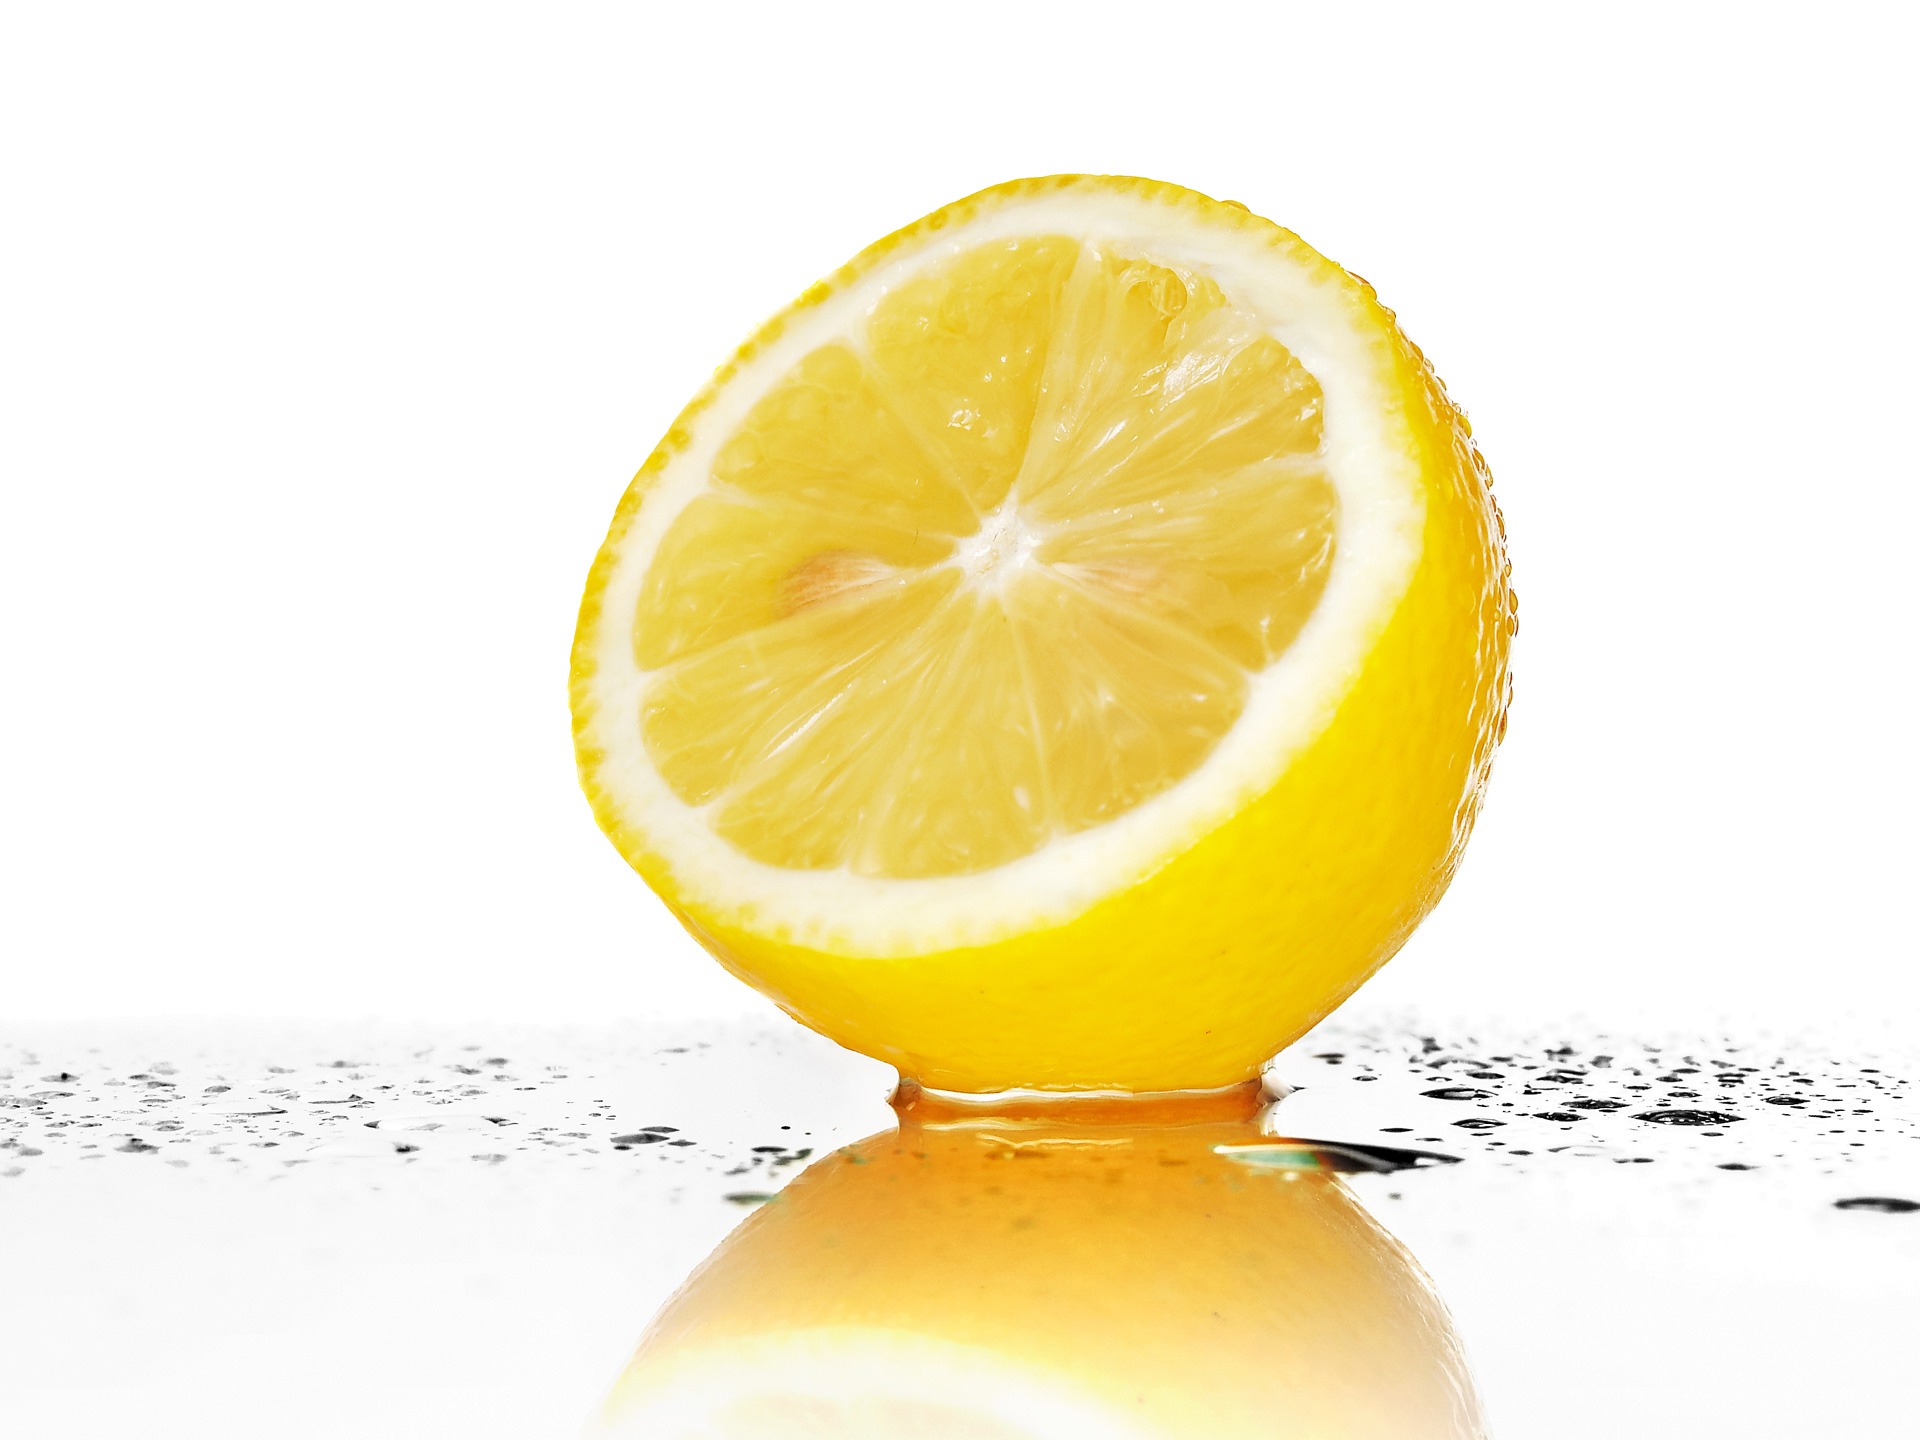 lovely lemon photos image